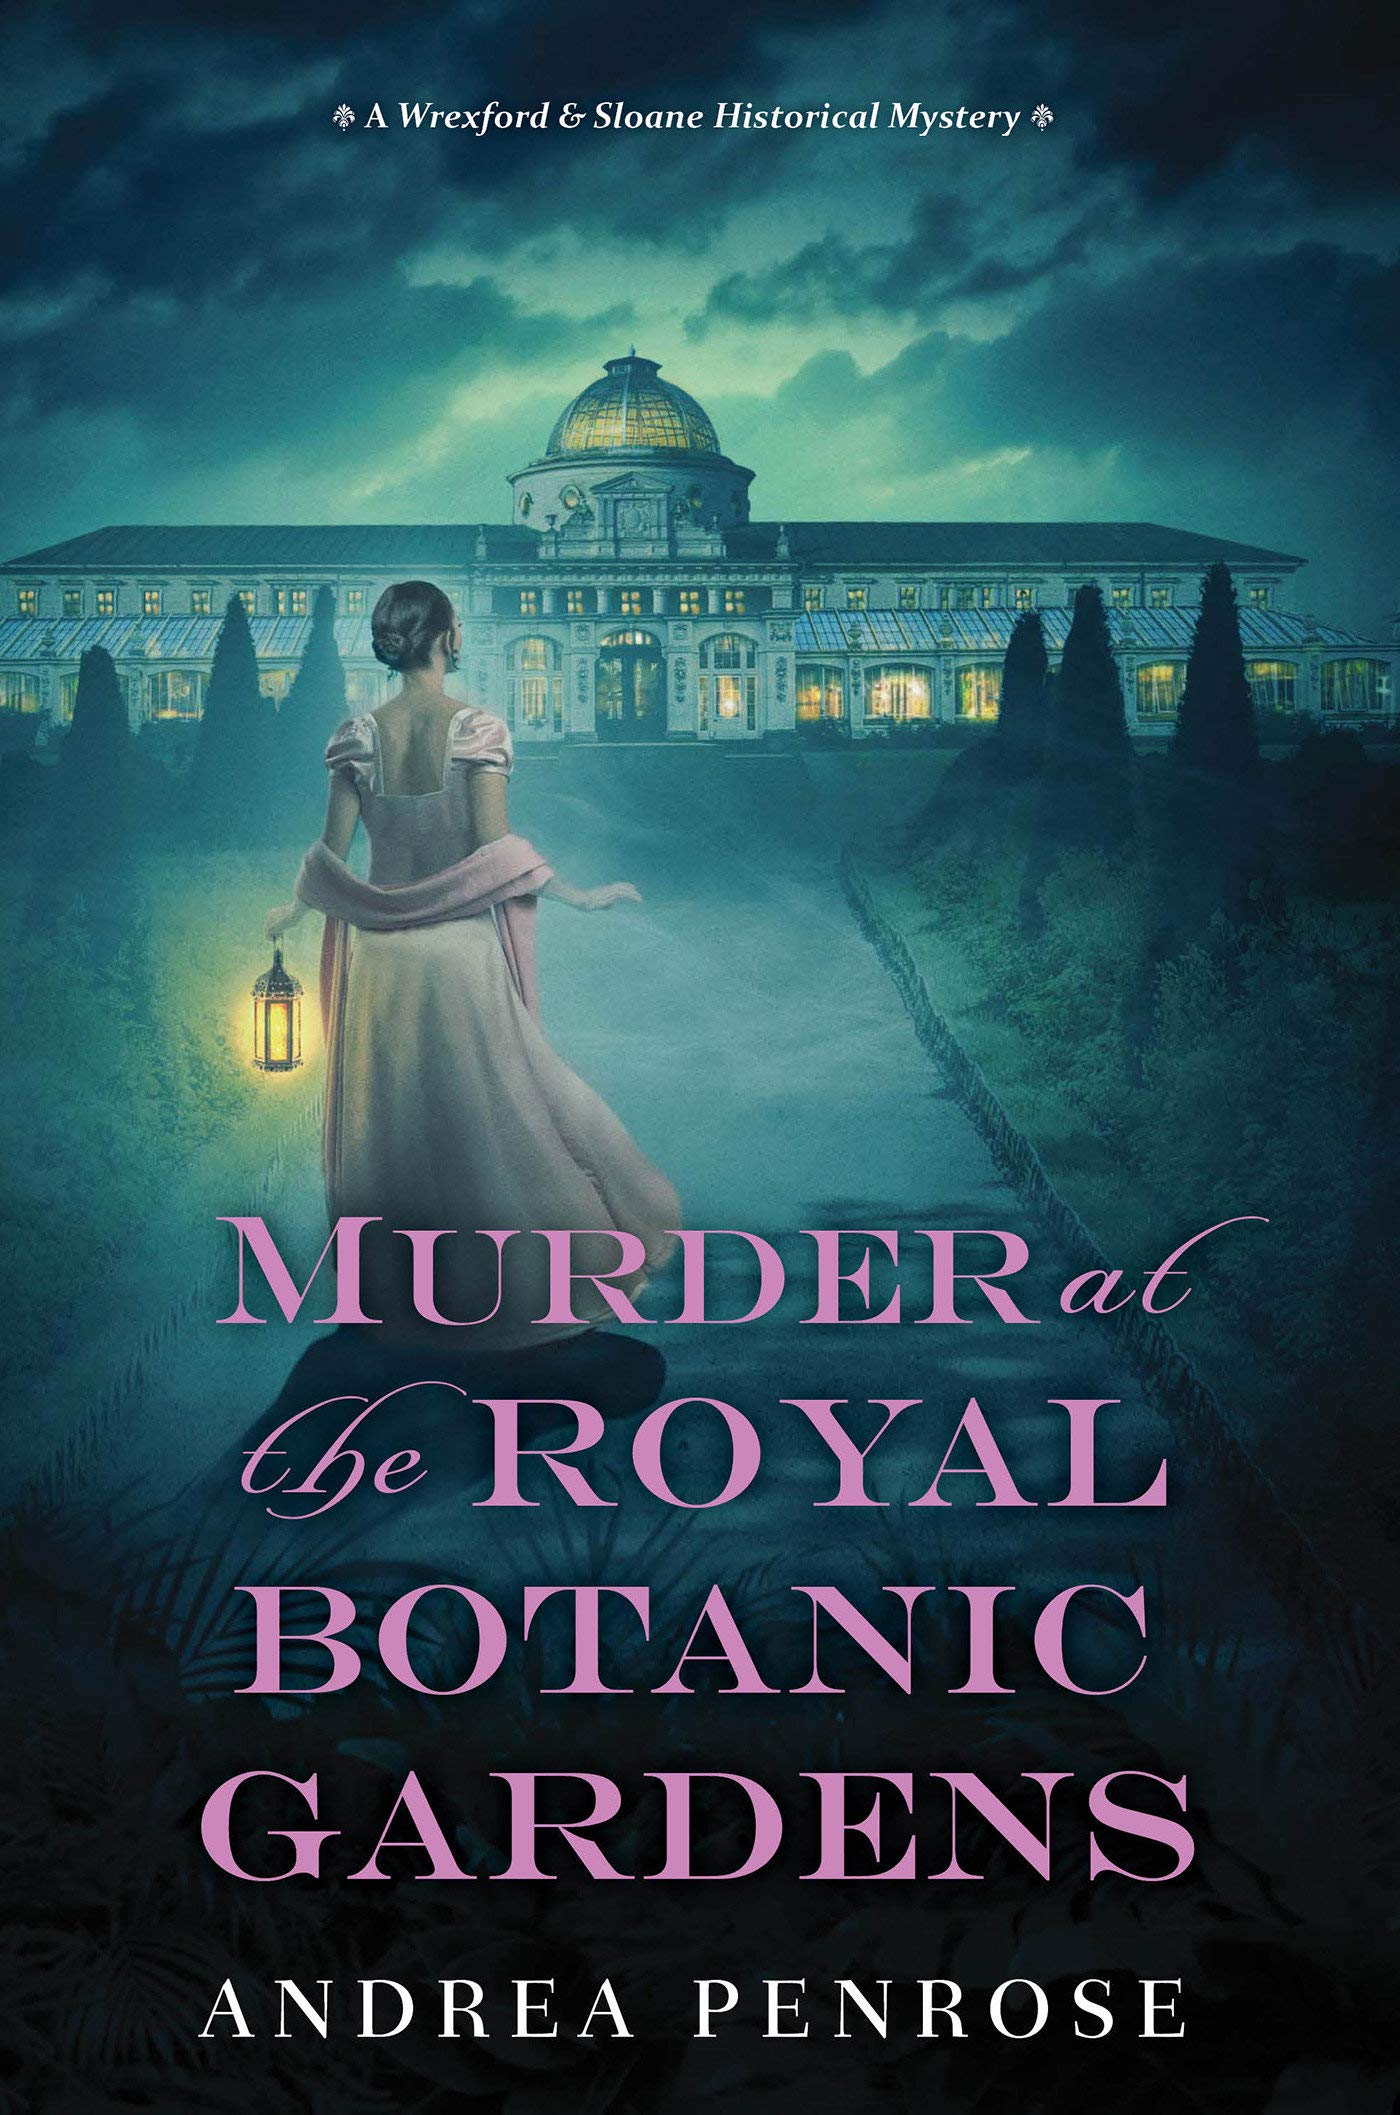 Image for "Murder at the Royal Botanic Gardens"